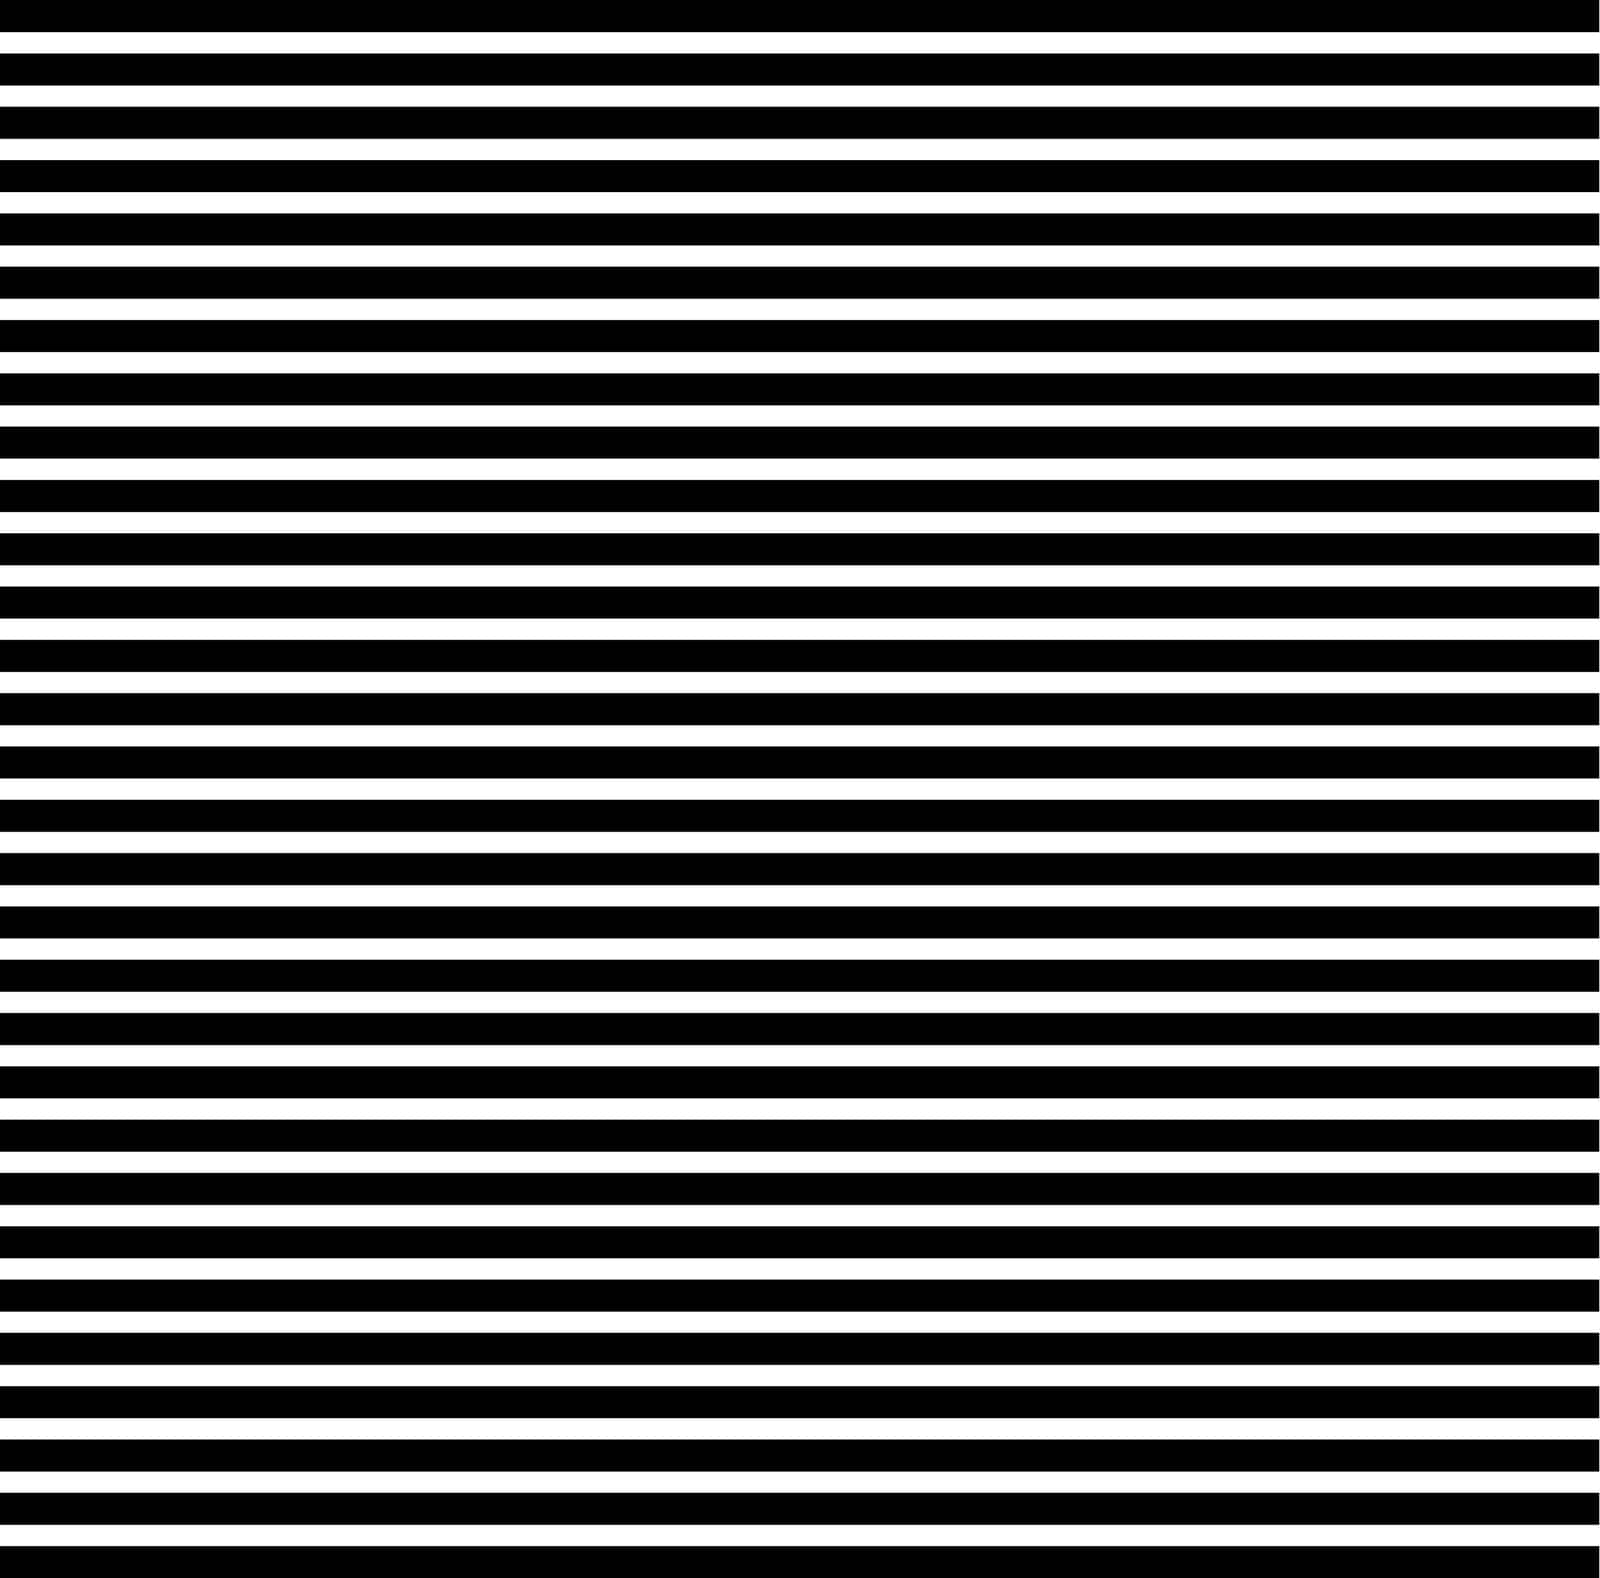 Backgrounds horizontal lines stripes different, thickness intensity, horizontal stripe design by koksikoks